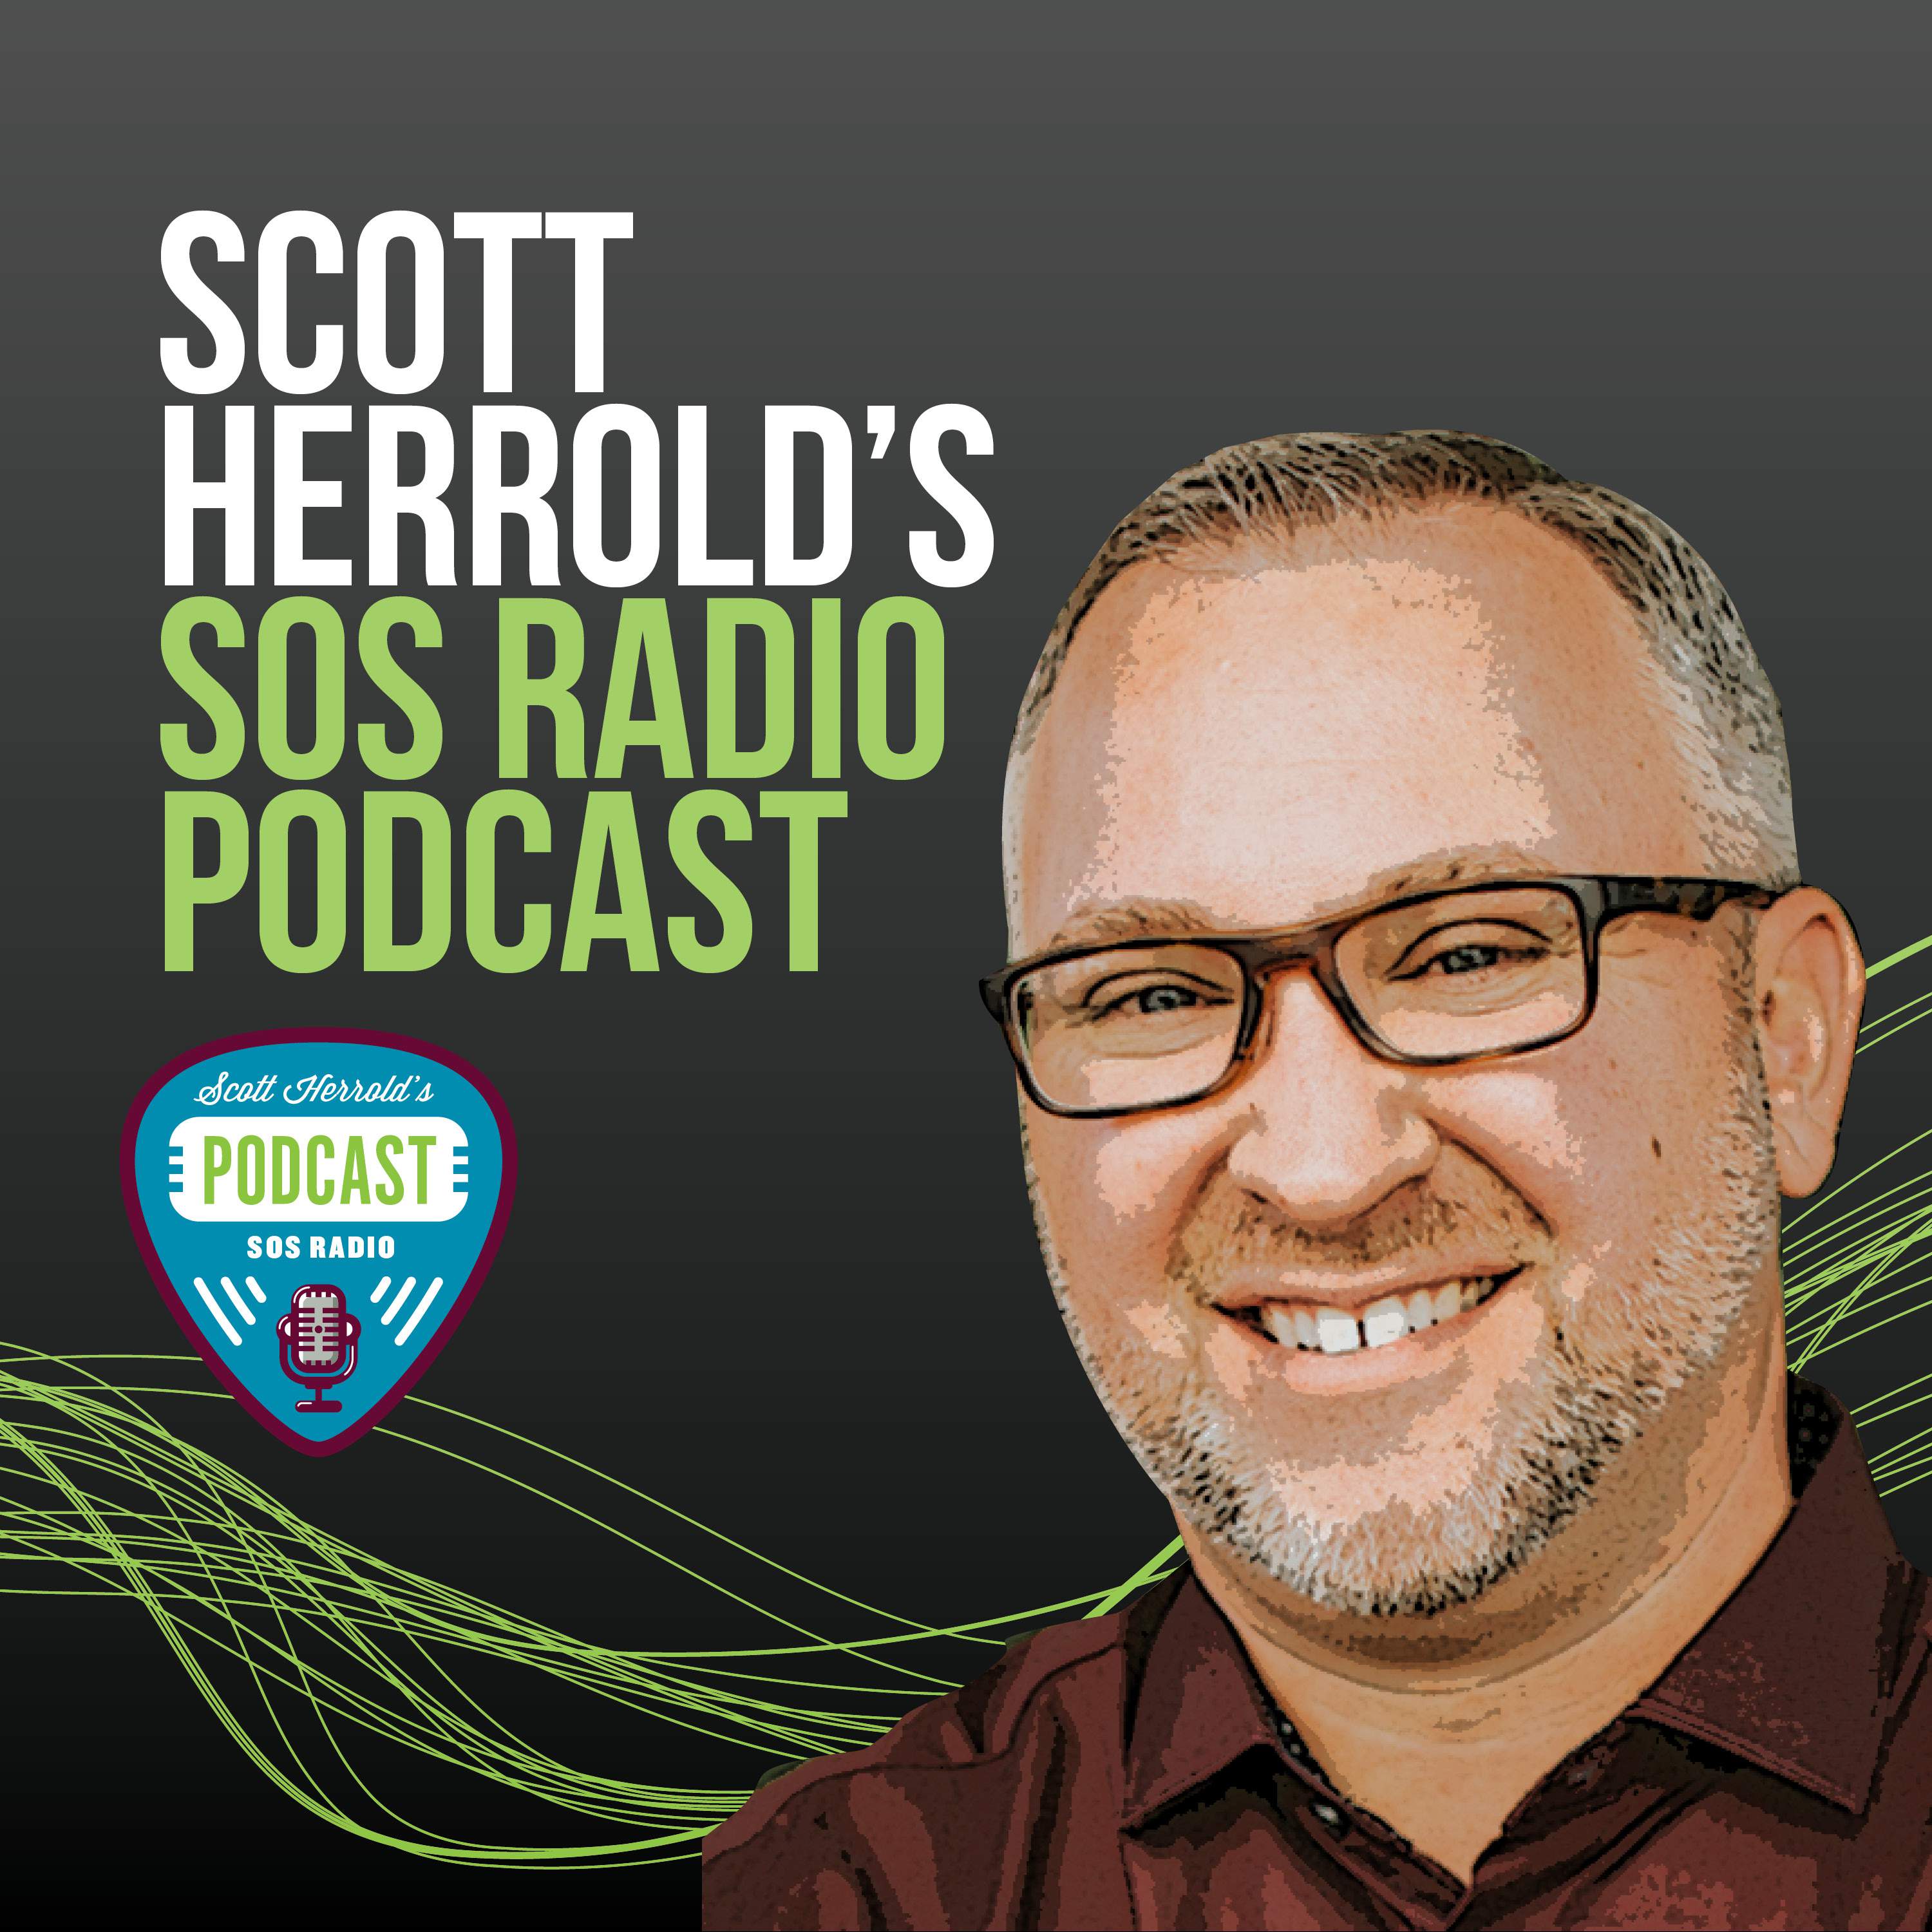 Scott Herrold's Podcast